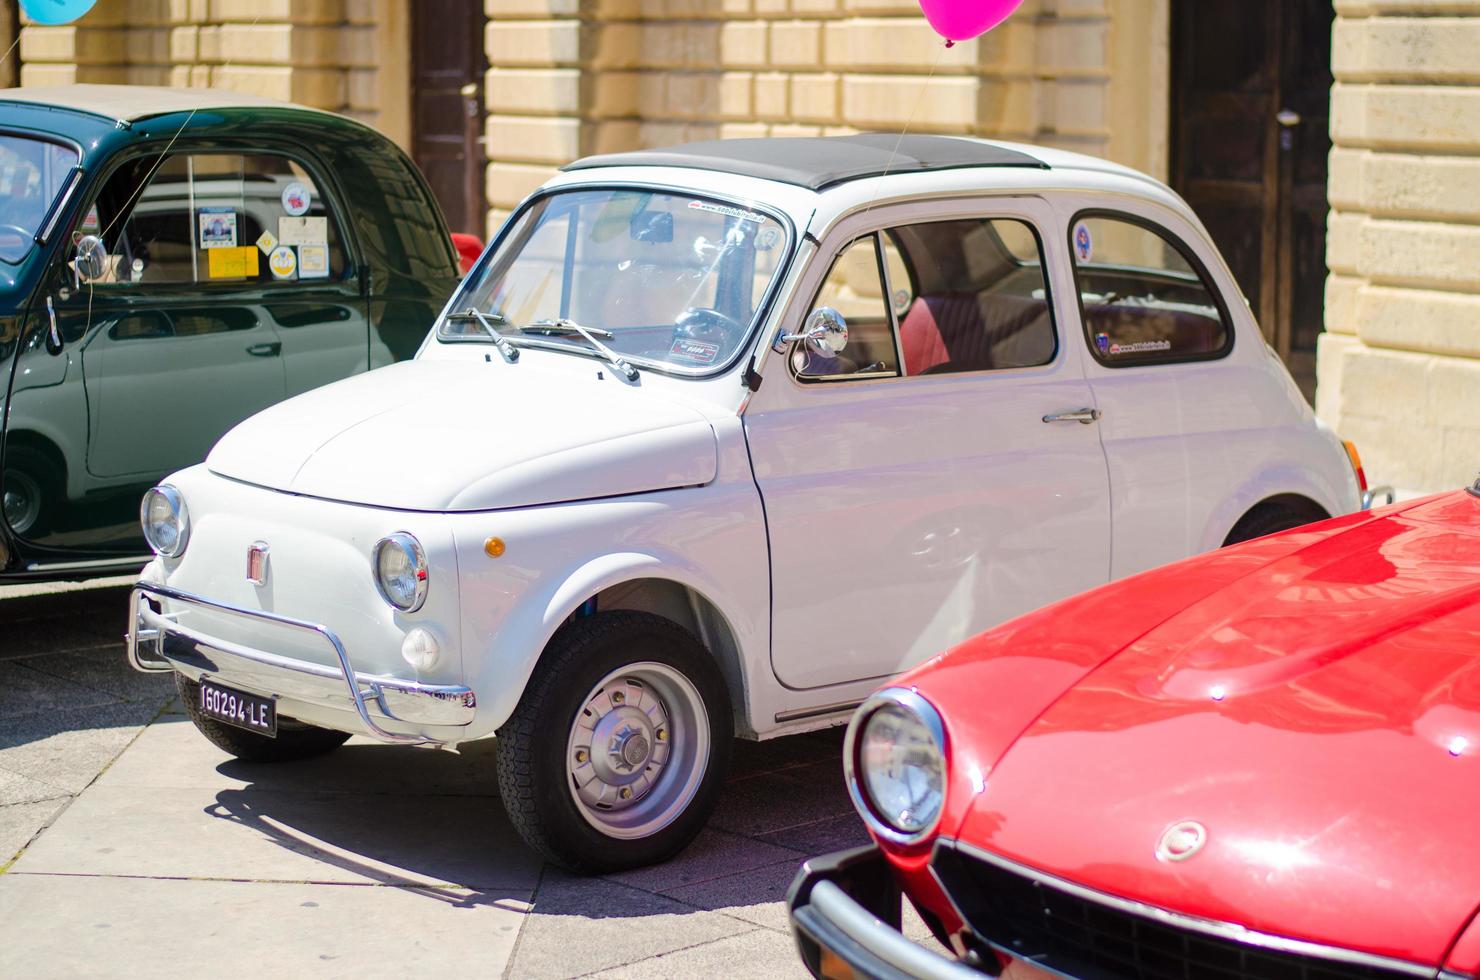 vintage klassiska retro bilar bilar i Italien foto